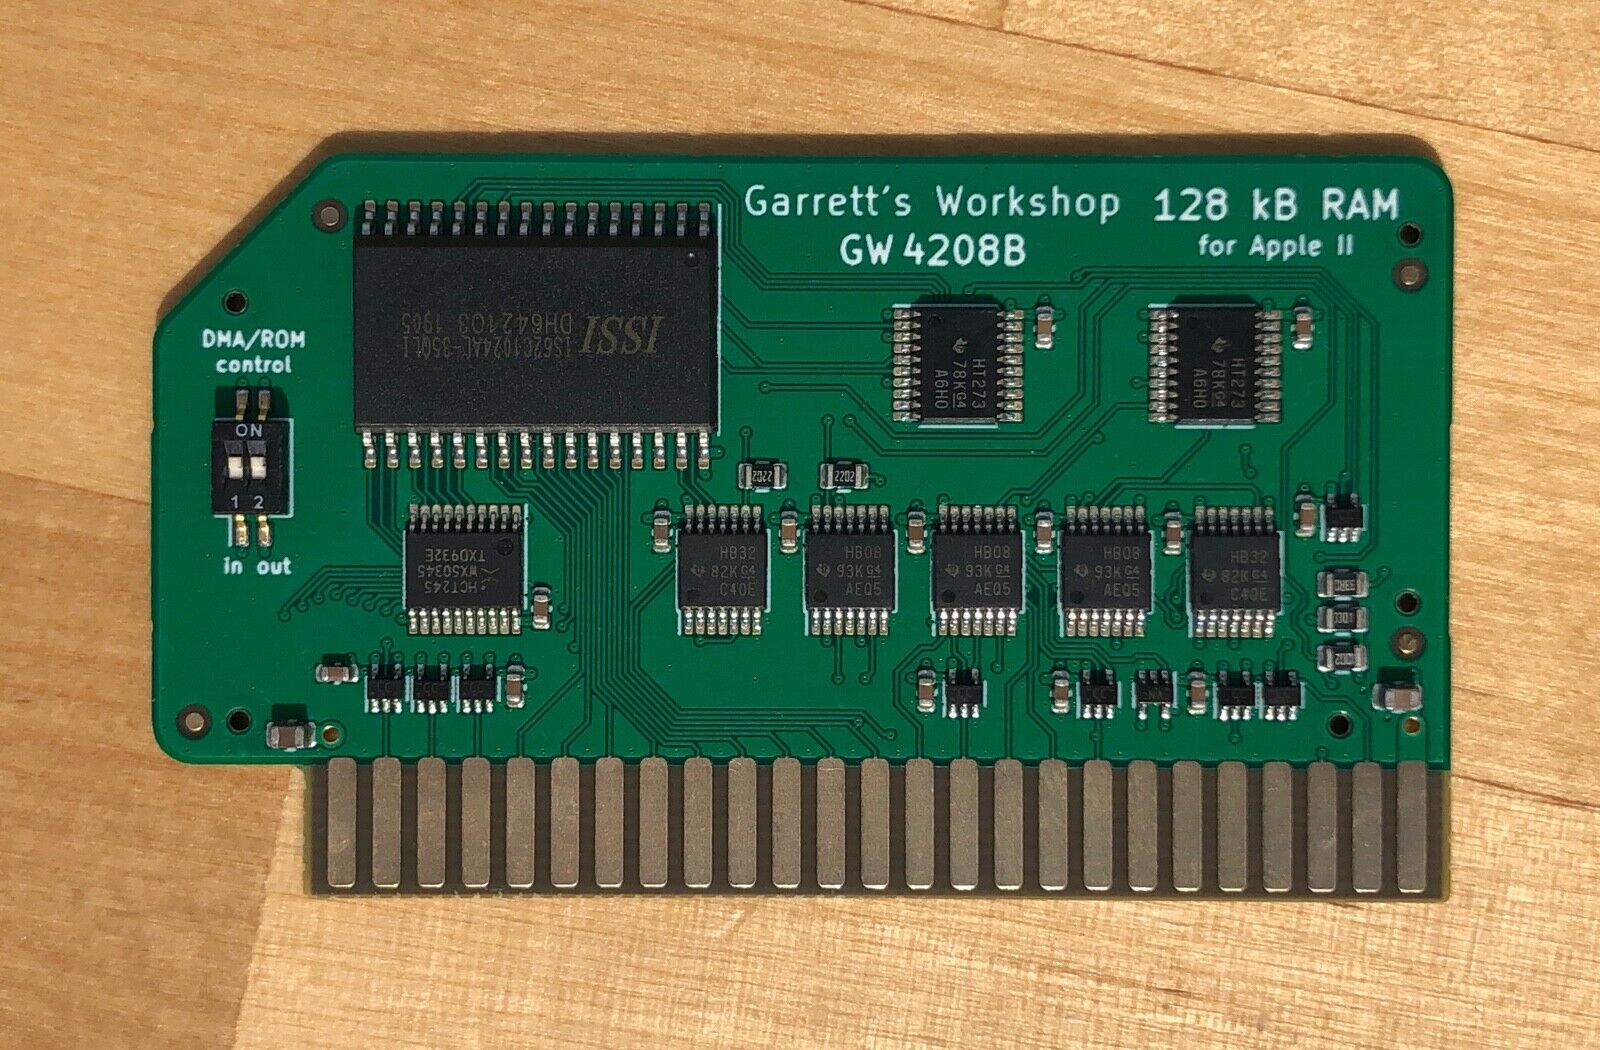 RAM128 (GW4208B) -- 128kB RAM for Apple II ][ -- Saturn 128 compatible